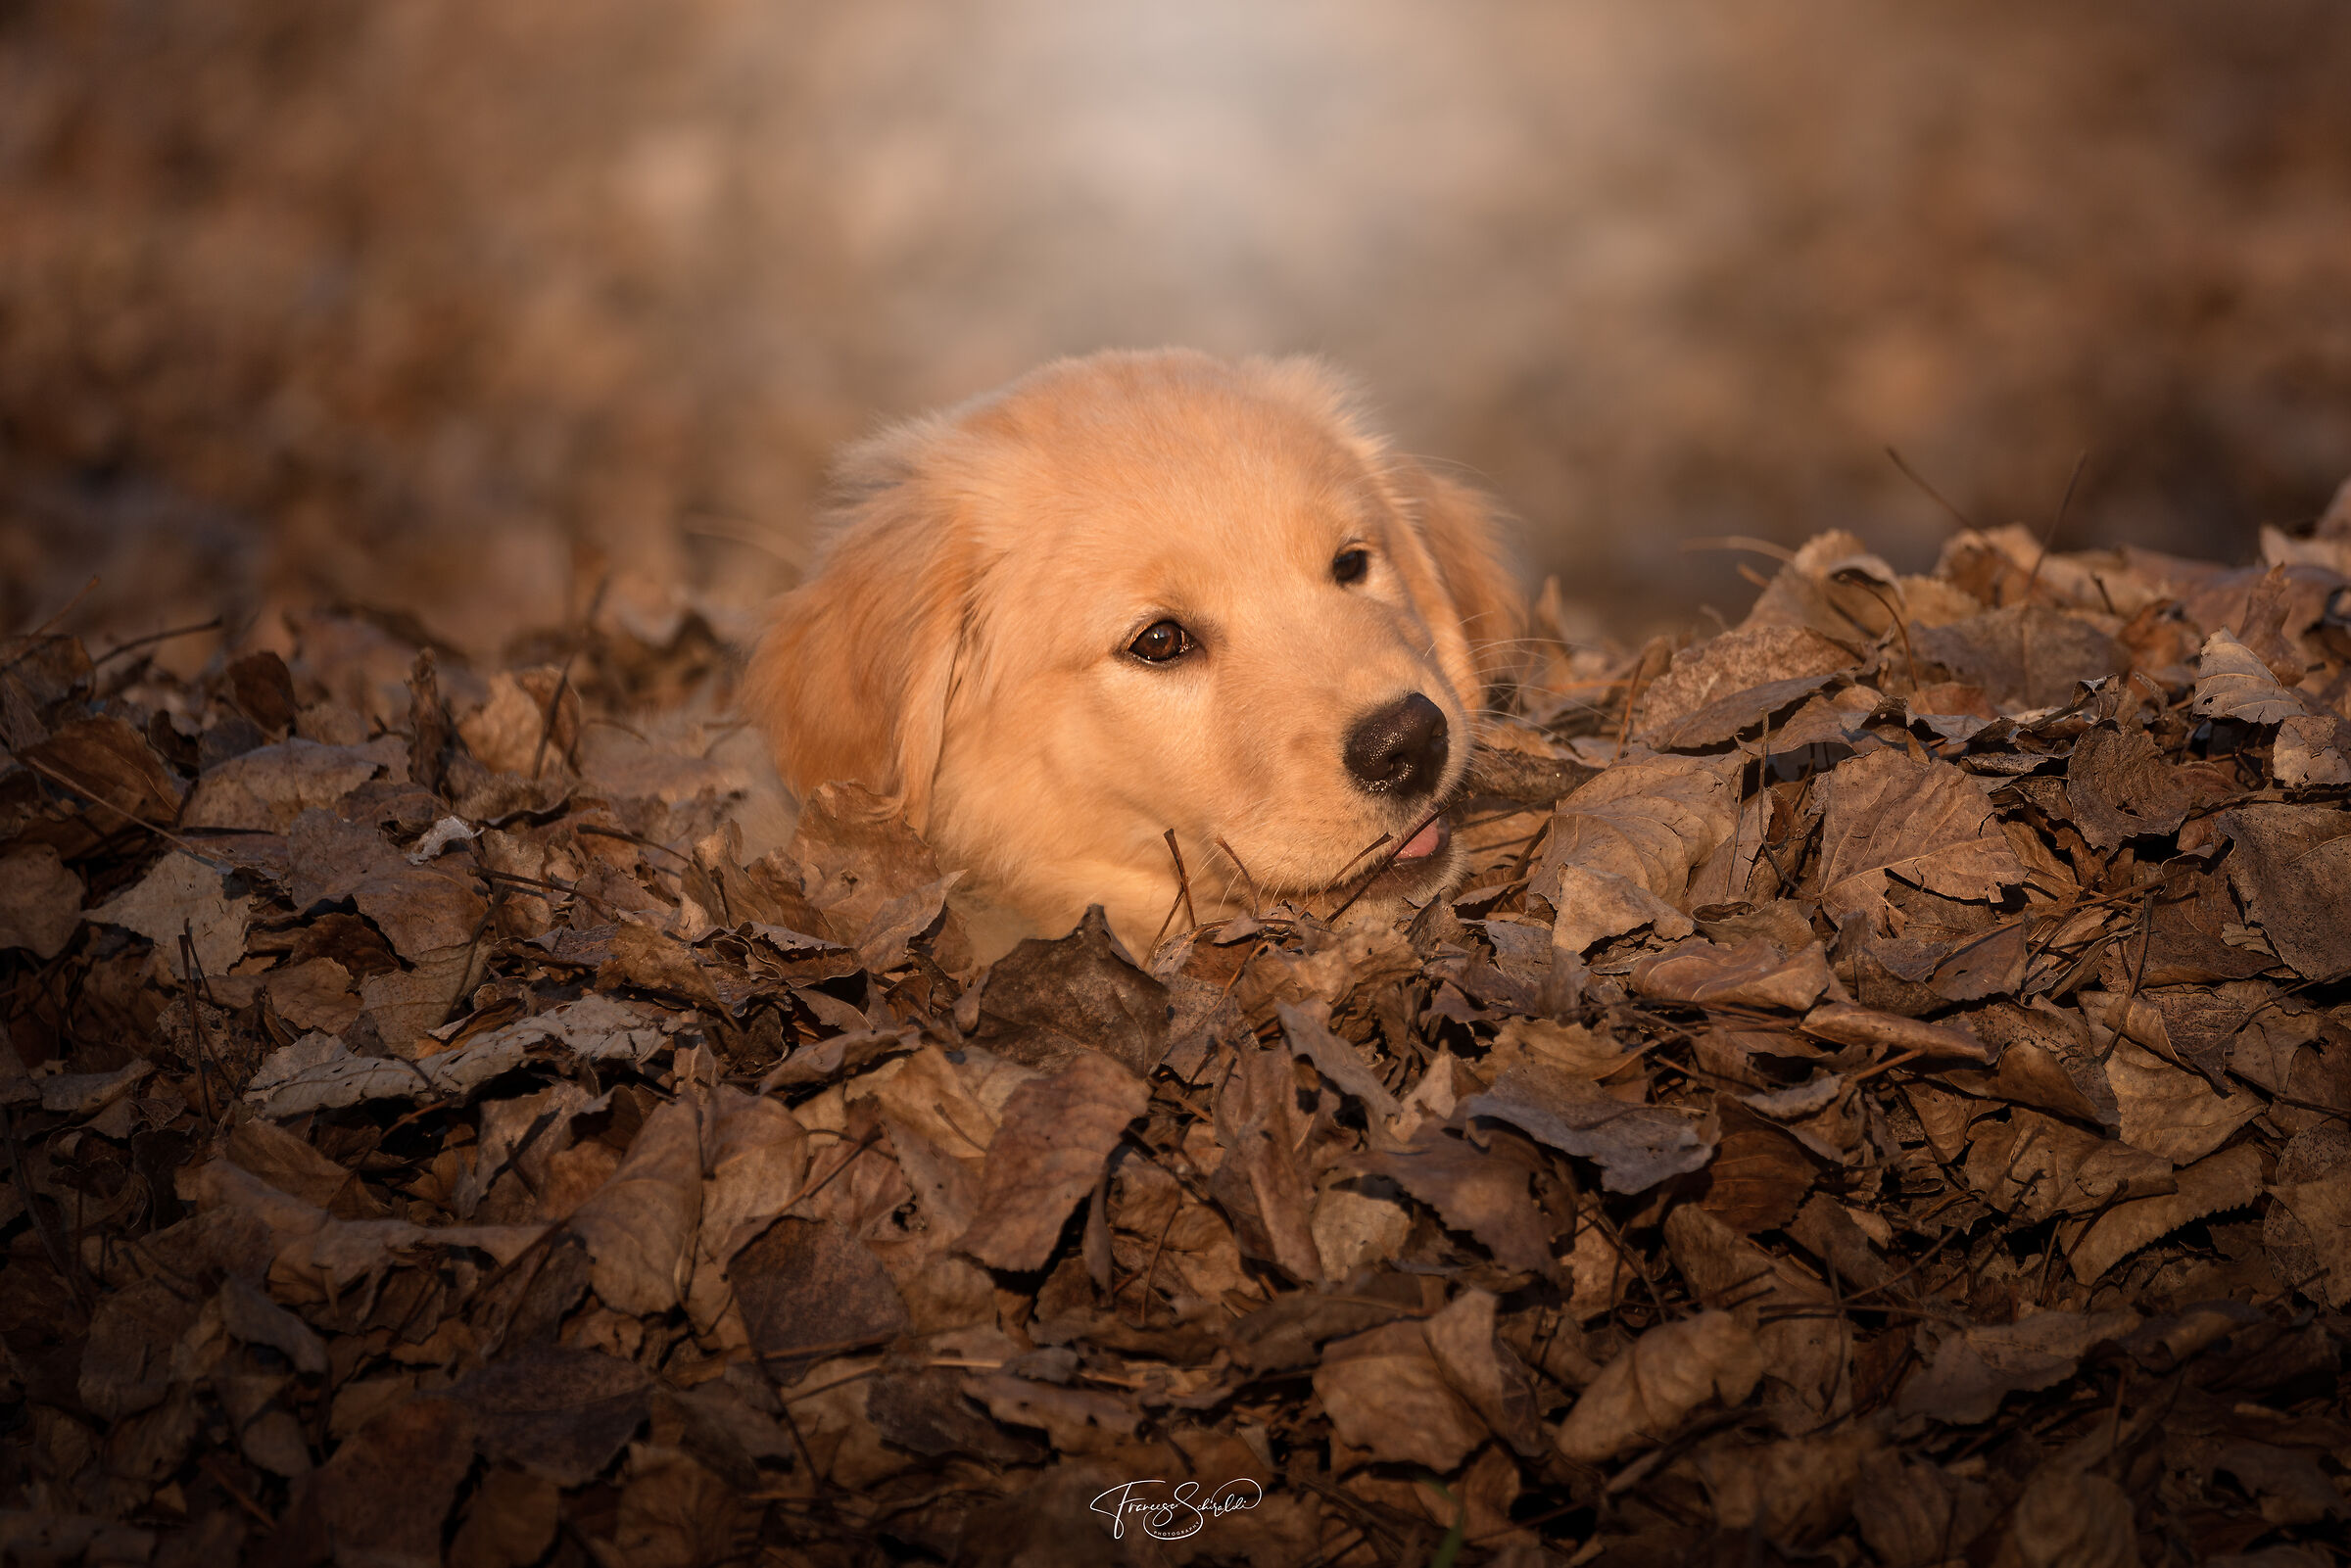 Maggie immersa tra le foglie...